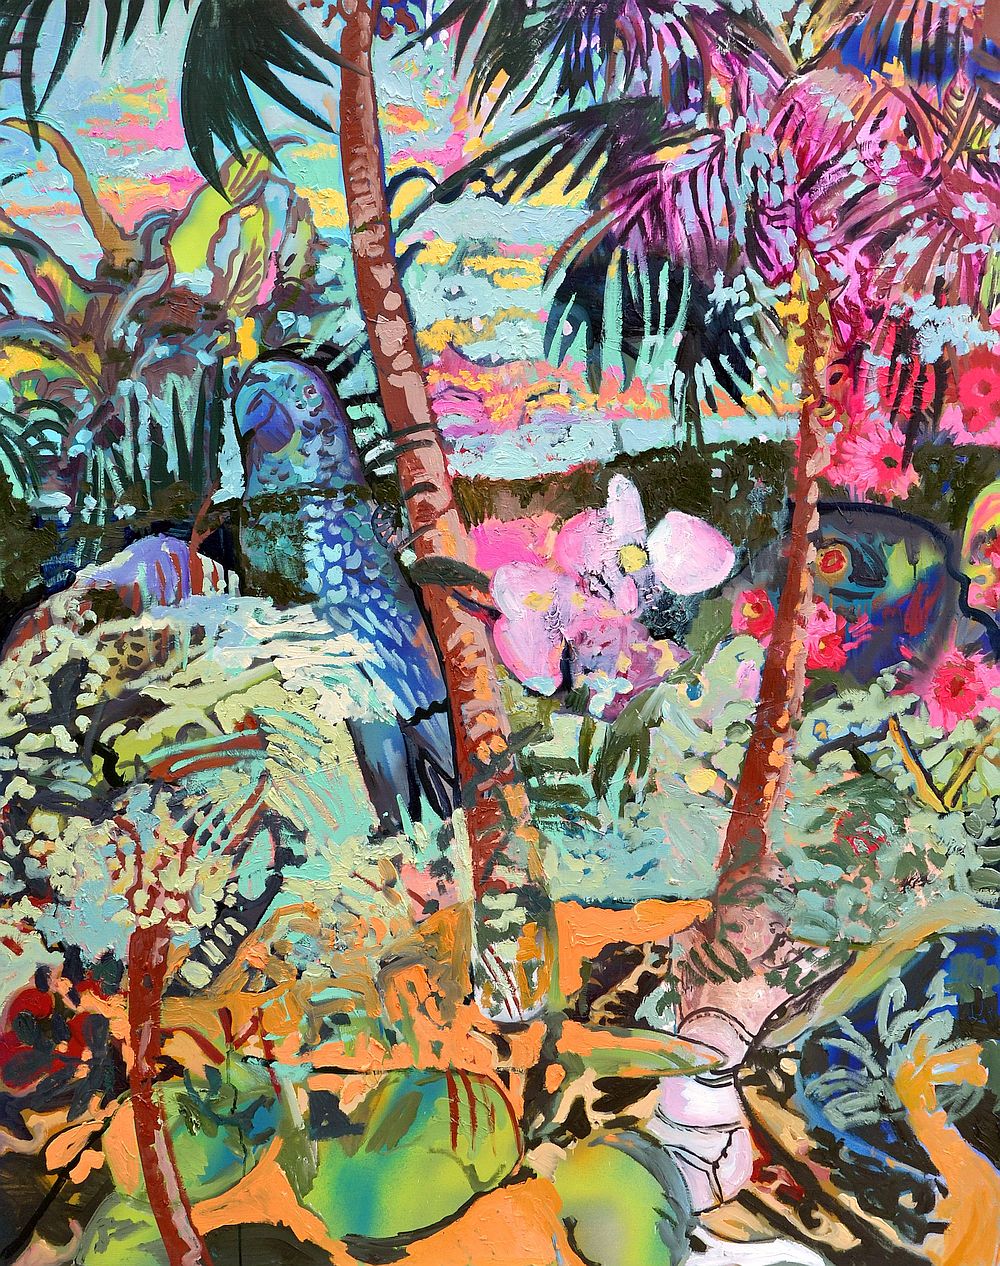 Backyard Utopia (Tropical Queensland Dreams) by Sarah Hickey | Lethbridge Landscape Prize 2021 Finalists | Lethbridge Gallery